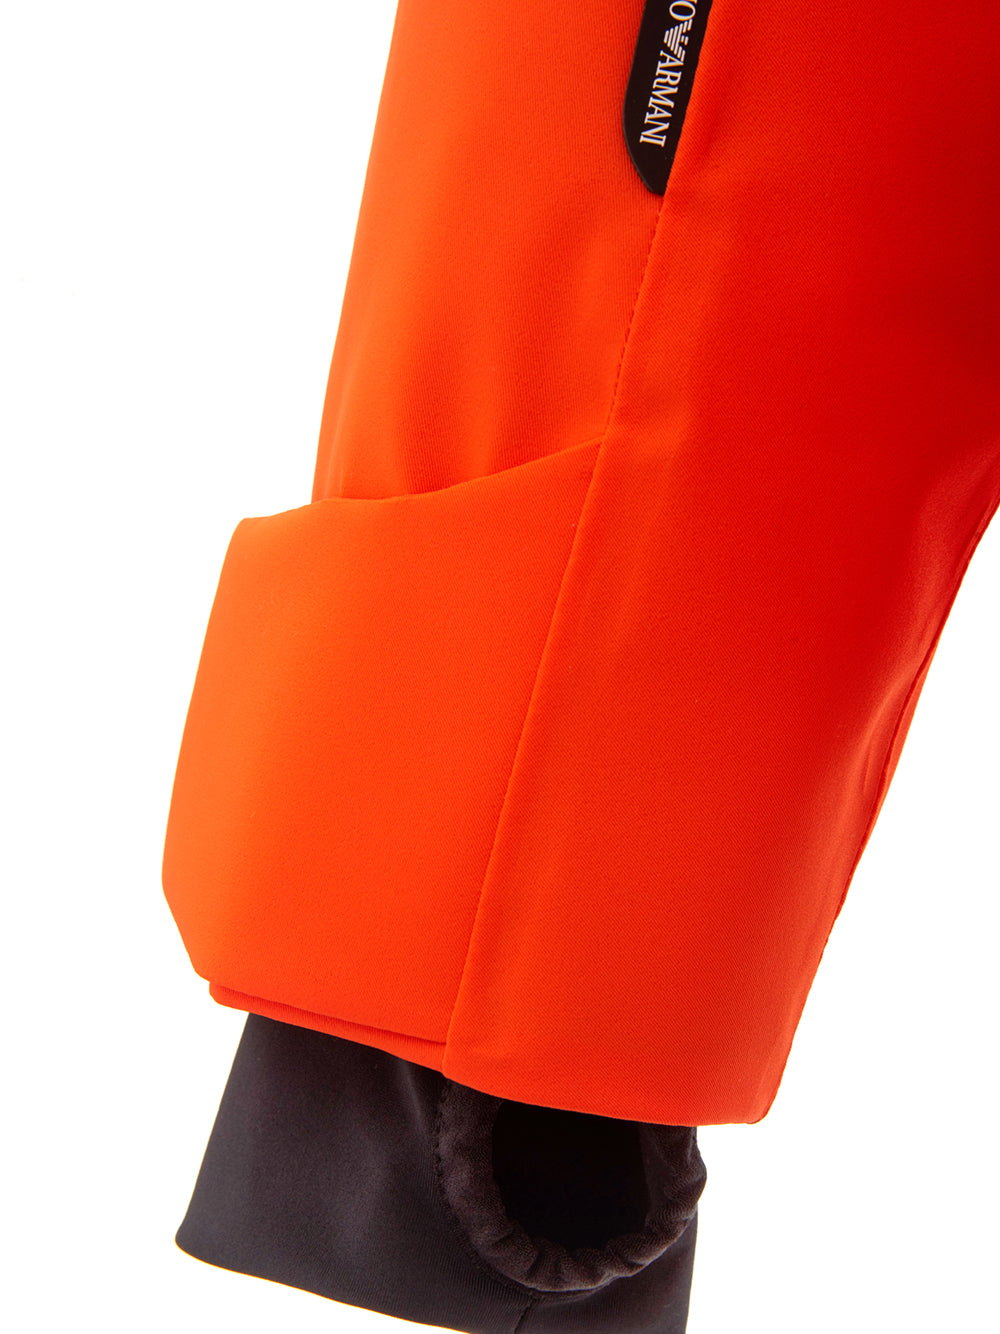 Orange Winter Technical Jacket